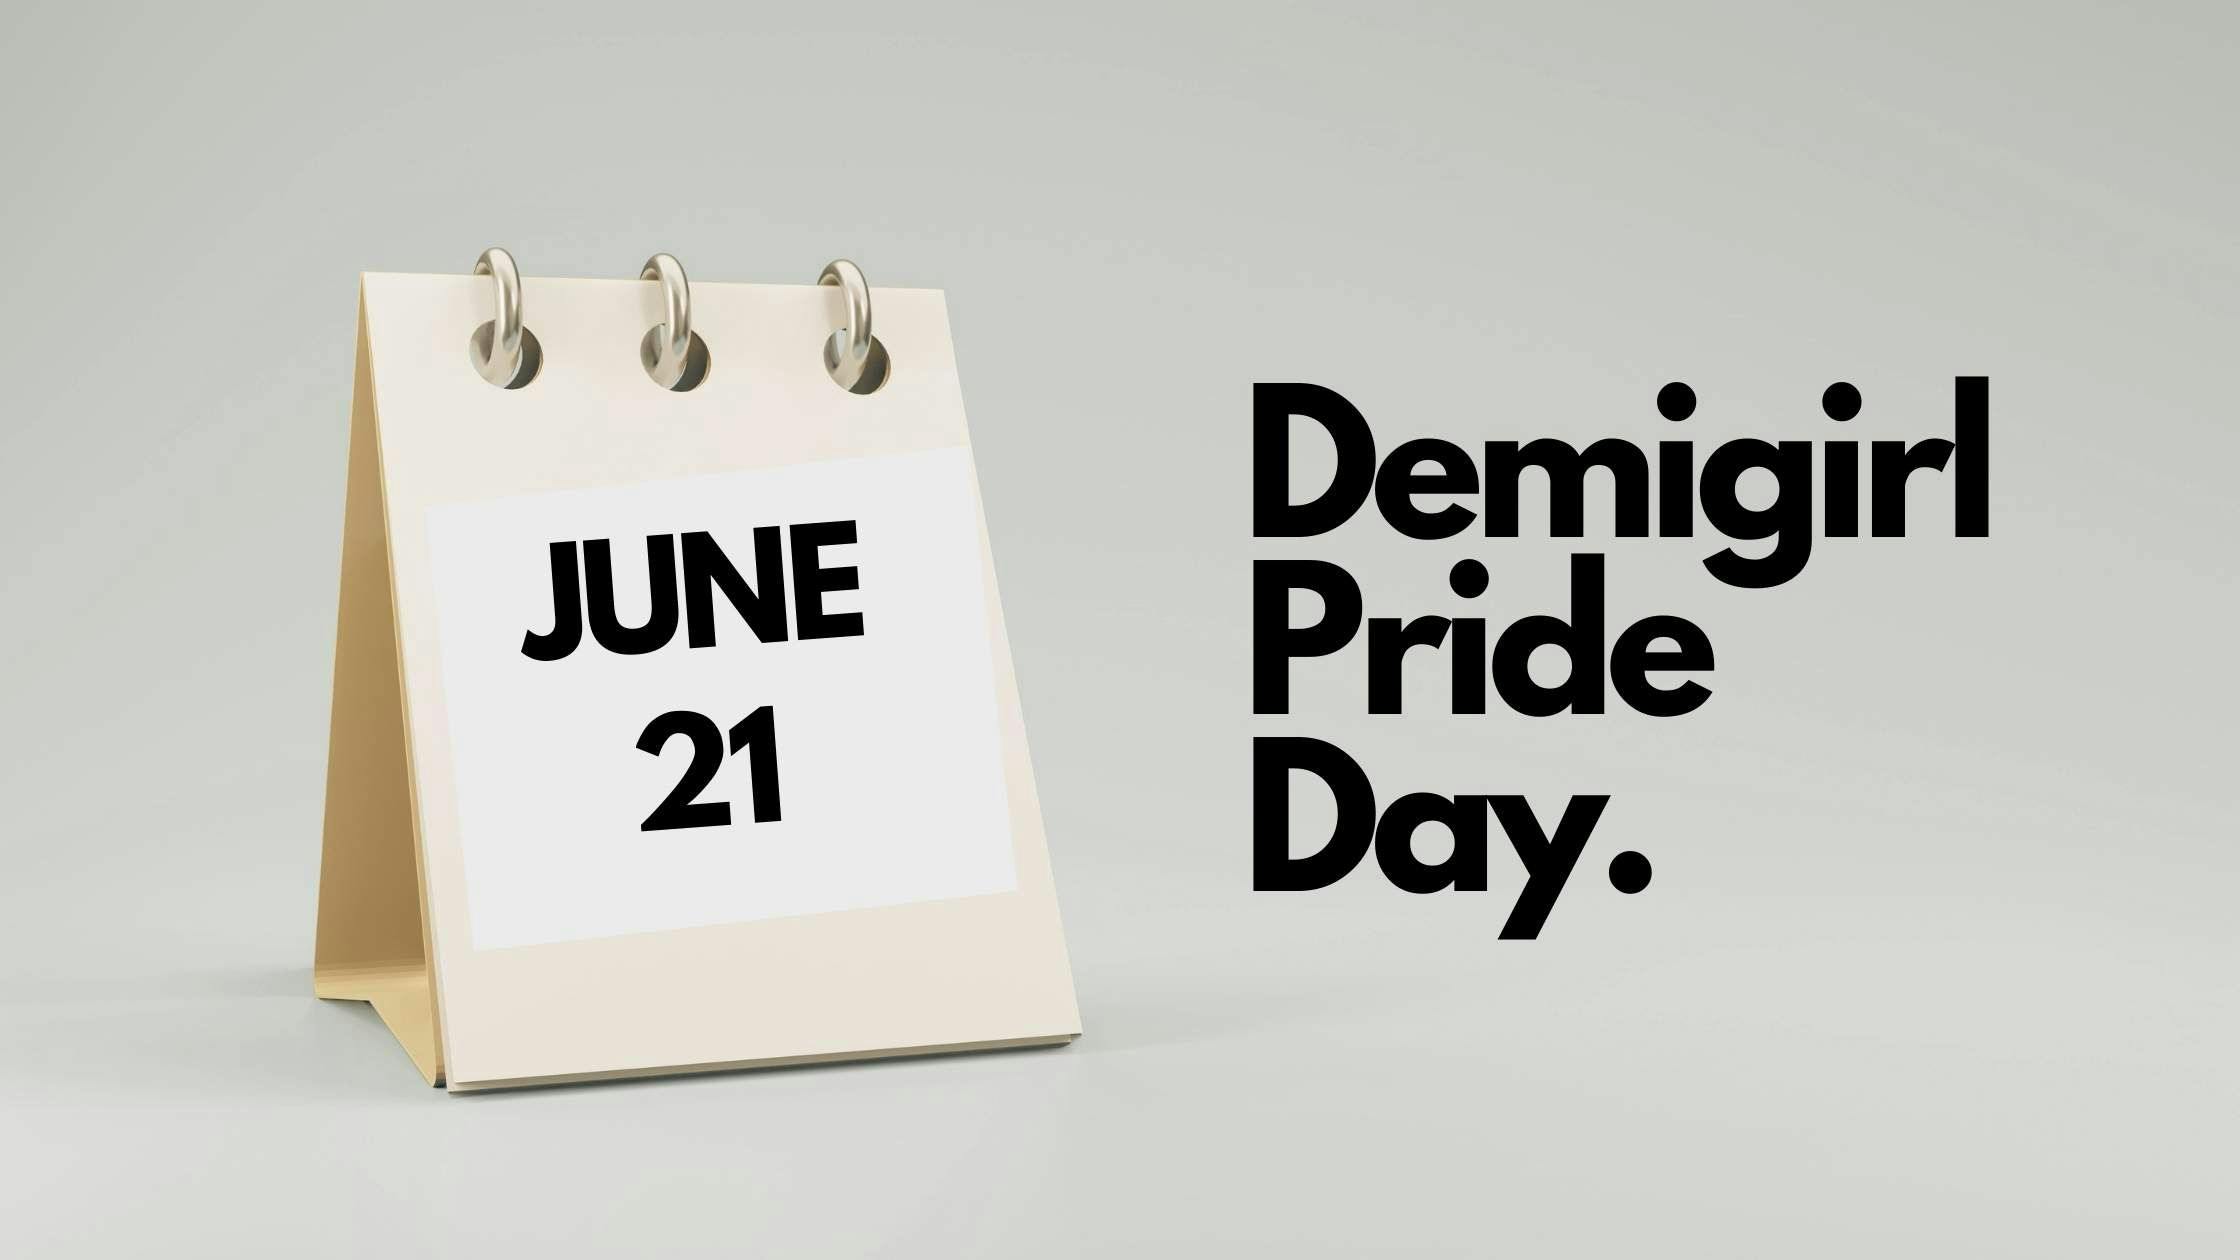 Demigirl Pride Day Date